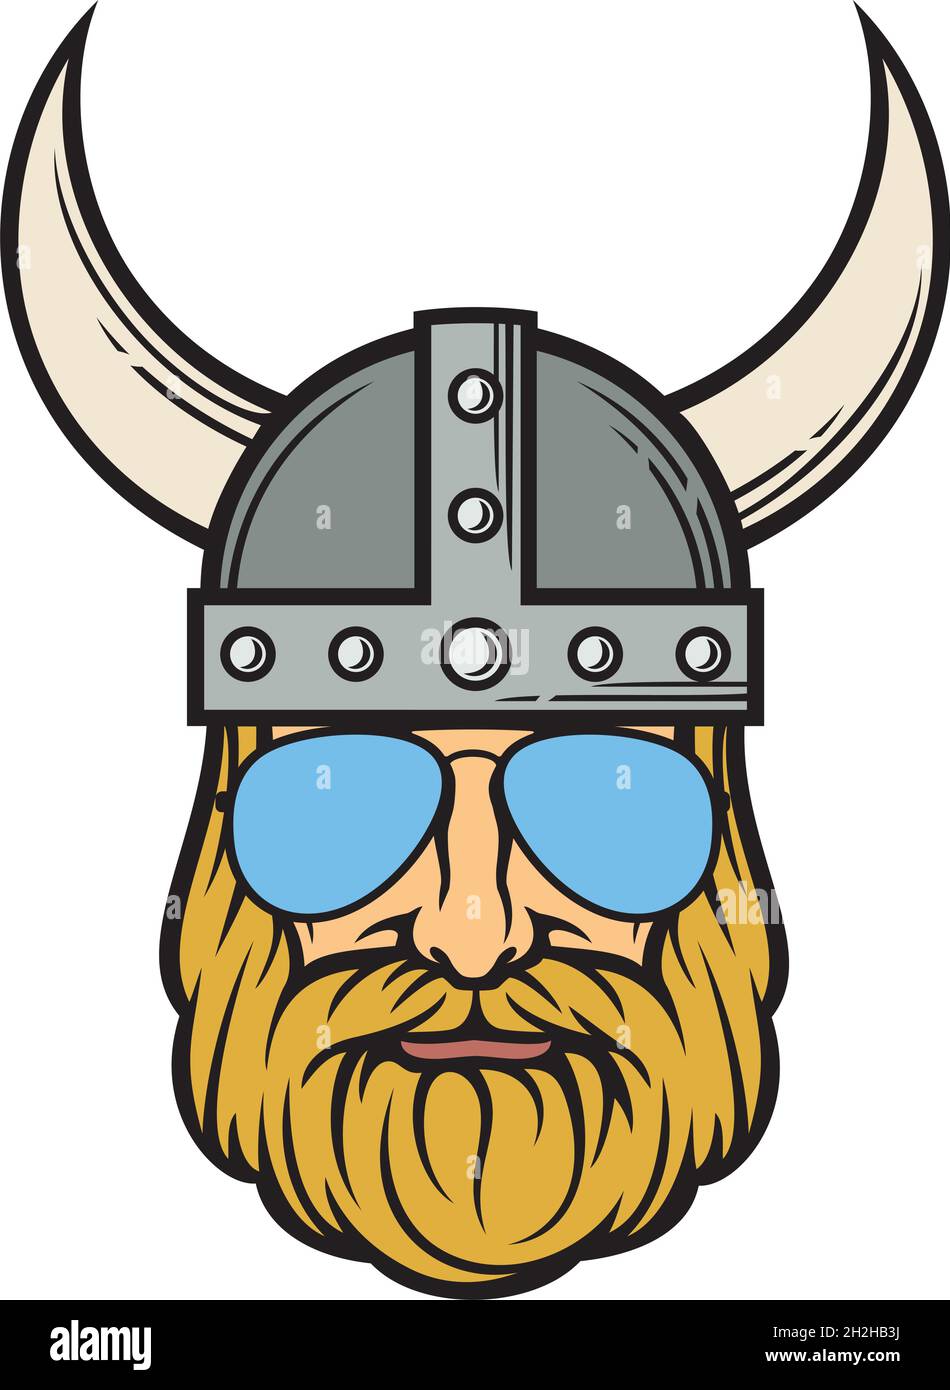 Armadura Vikinga. Boceto Dibujado A Mano De Equipo De Lucha